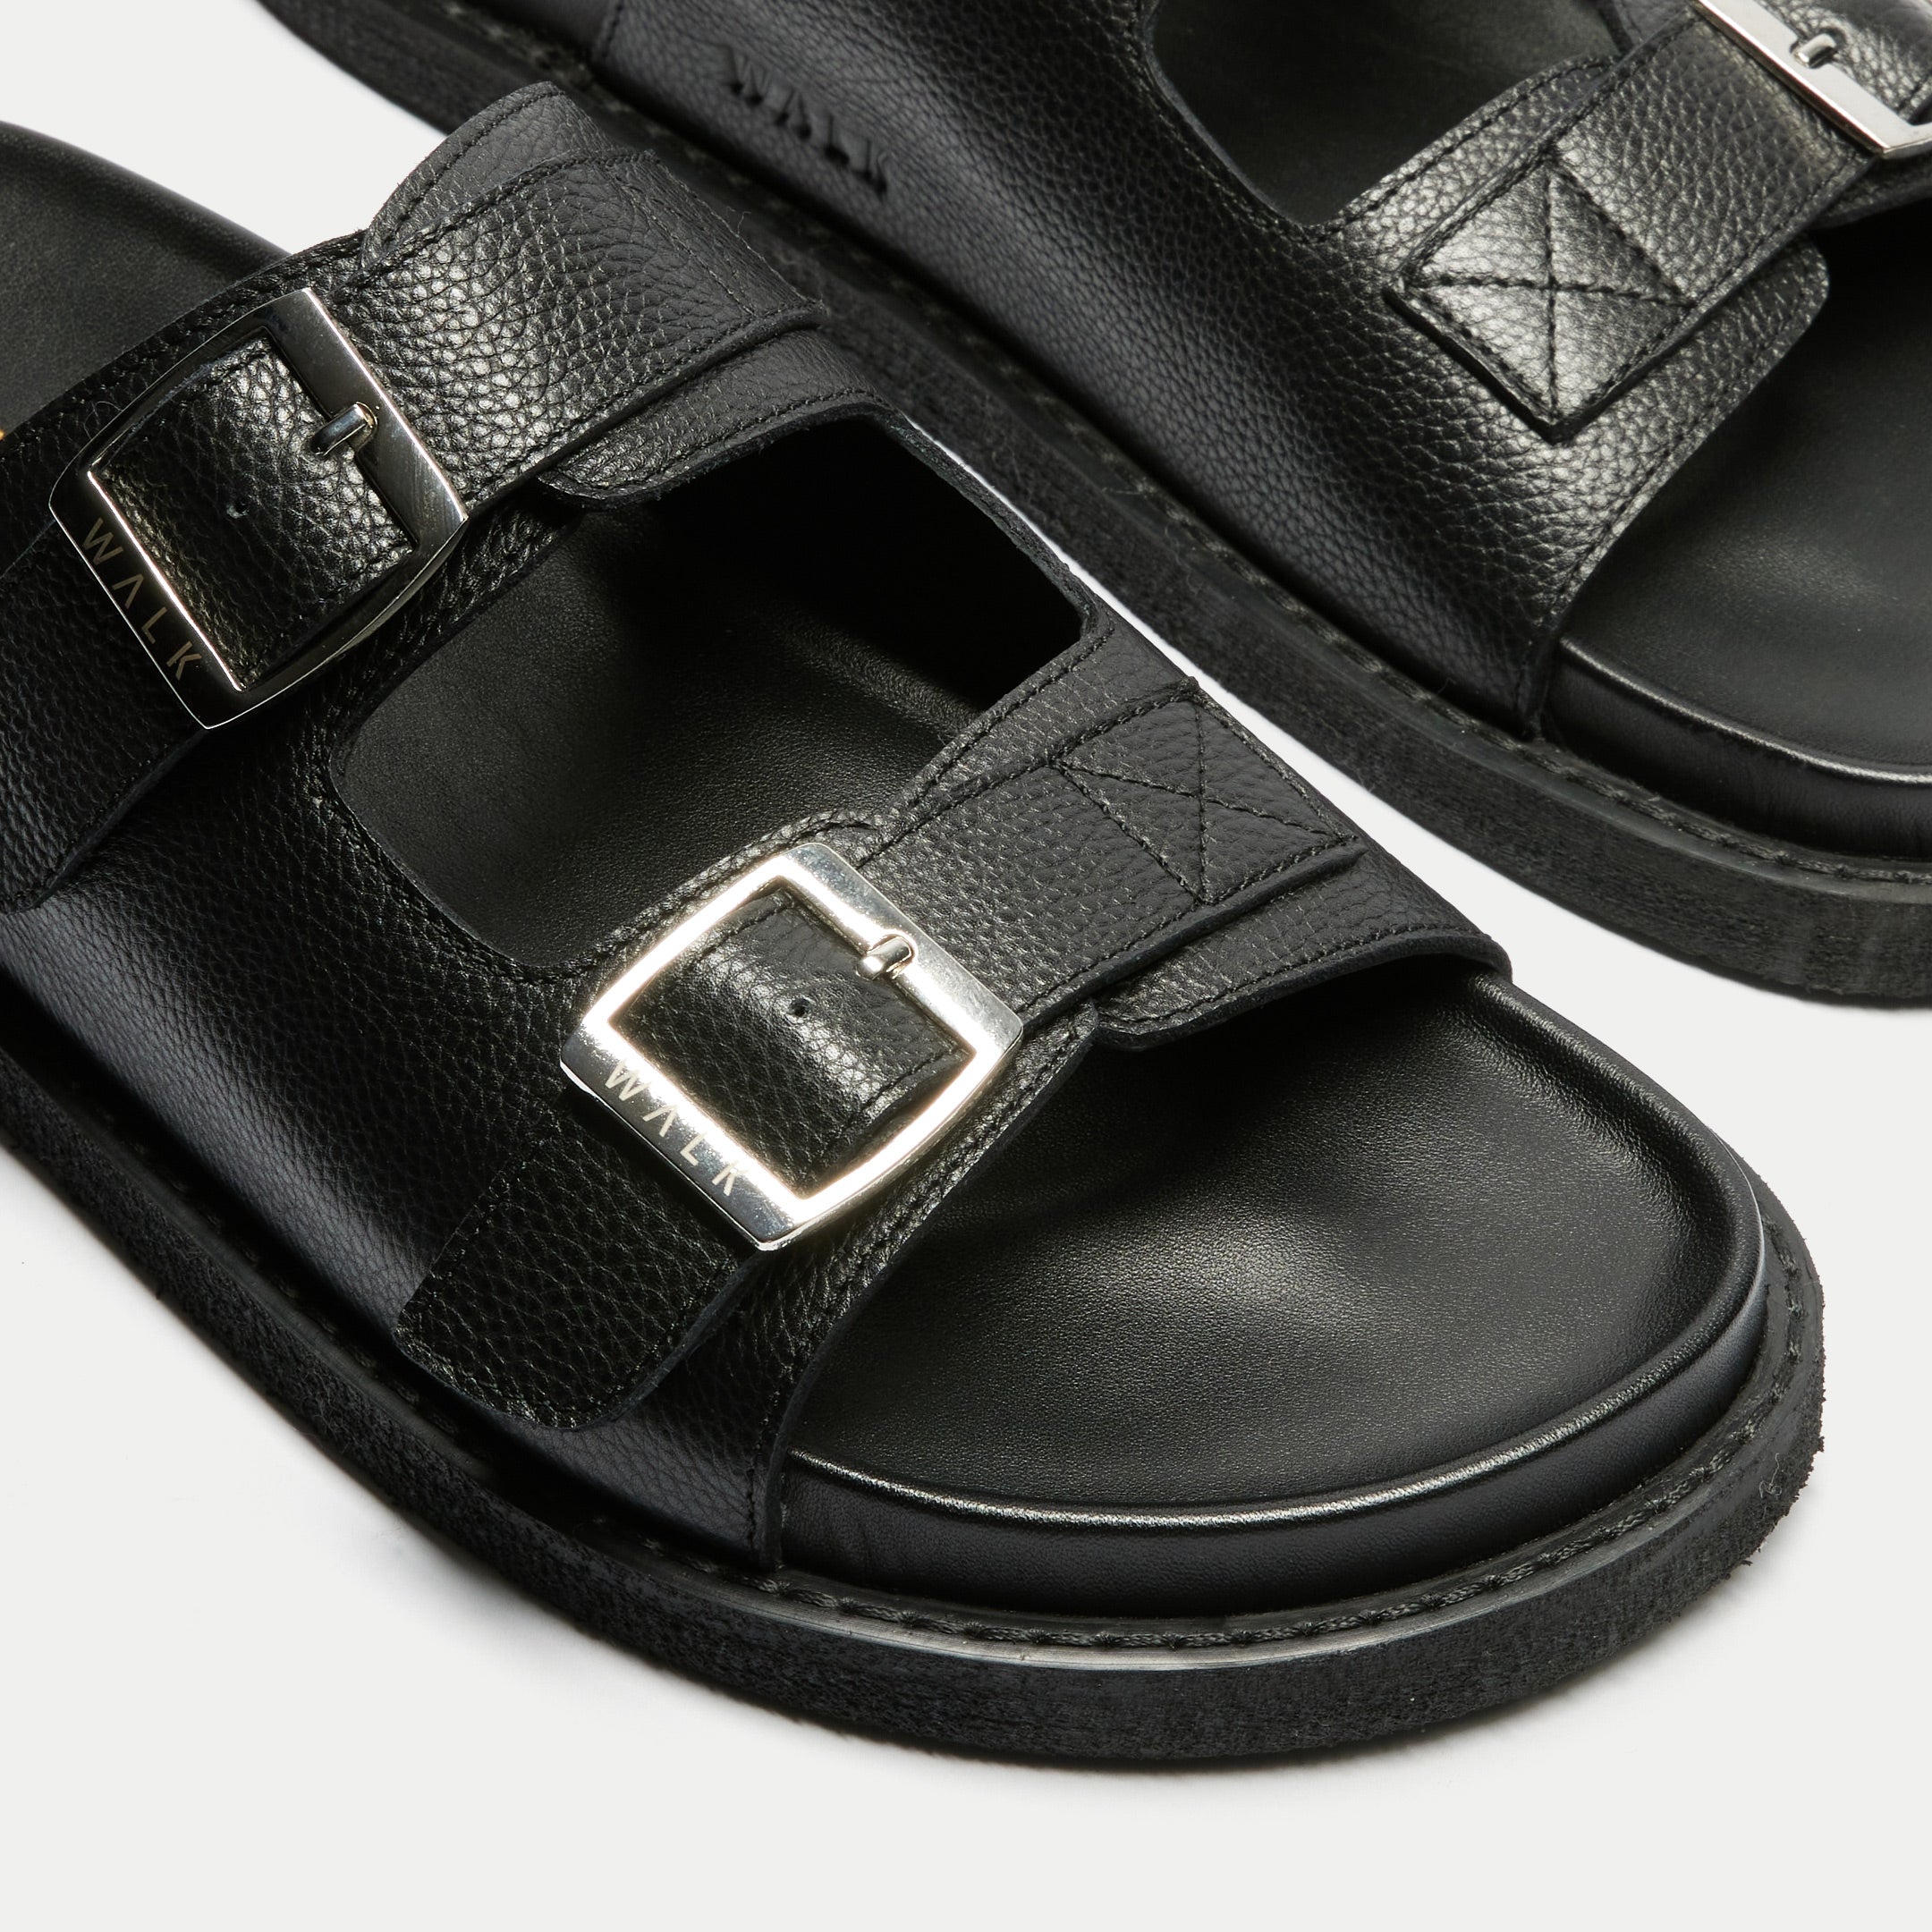 Walk London Shore Double Strap Sandal in Black Leather